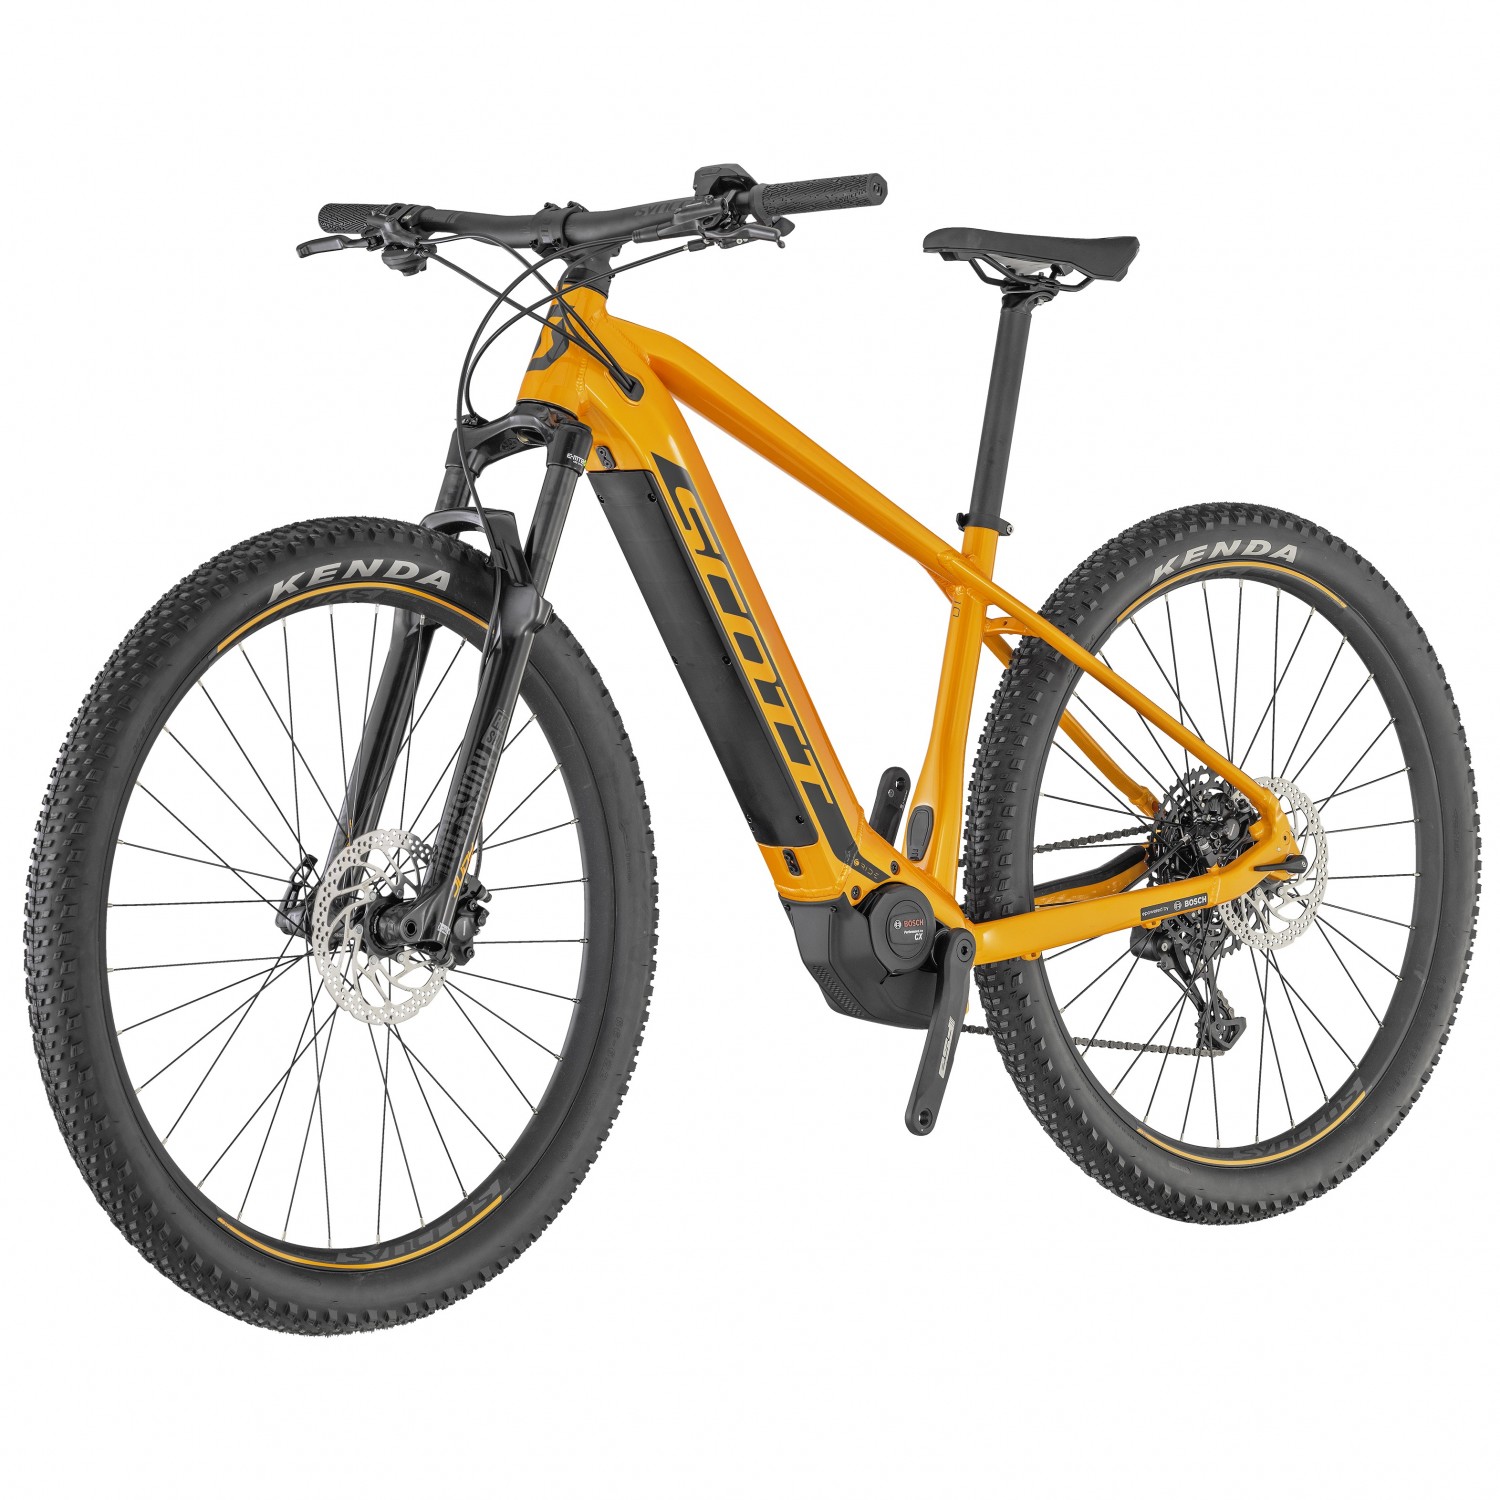 Luiheid Fabel Lodge Велосипед SCOTT Aspect eRide 910 (2020), в официальном магазине SCOTT,  артикул 274838 по цене 300 220 руб. - ridecycle.ru